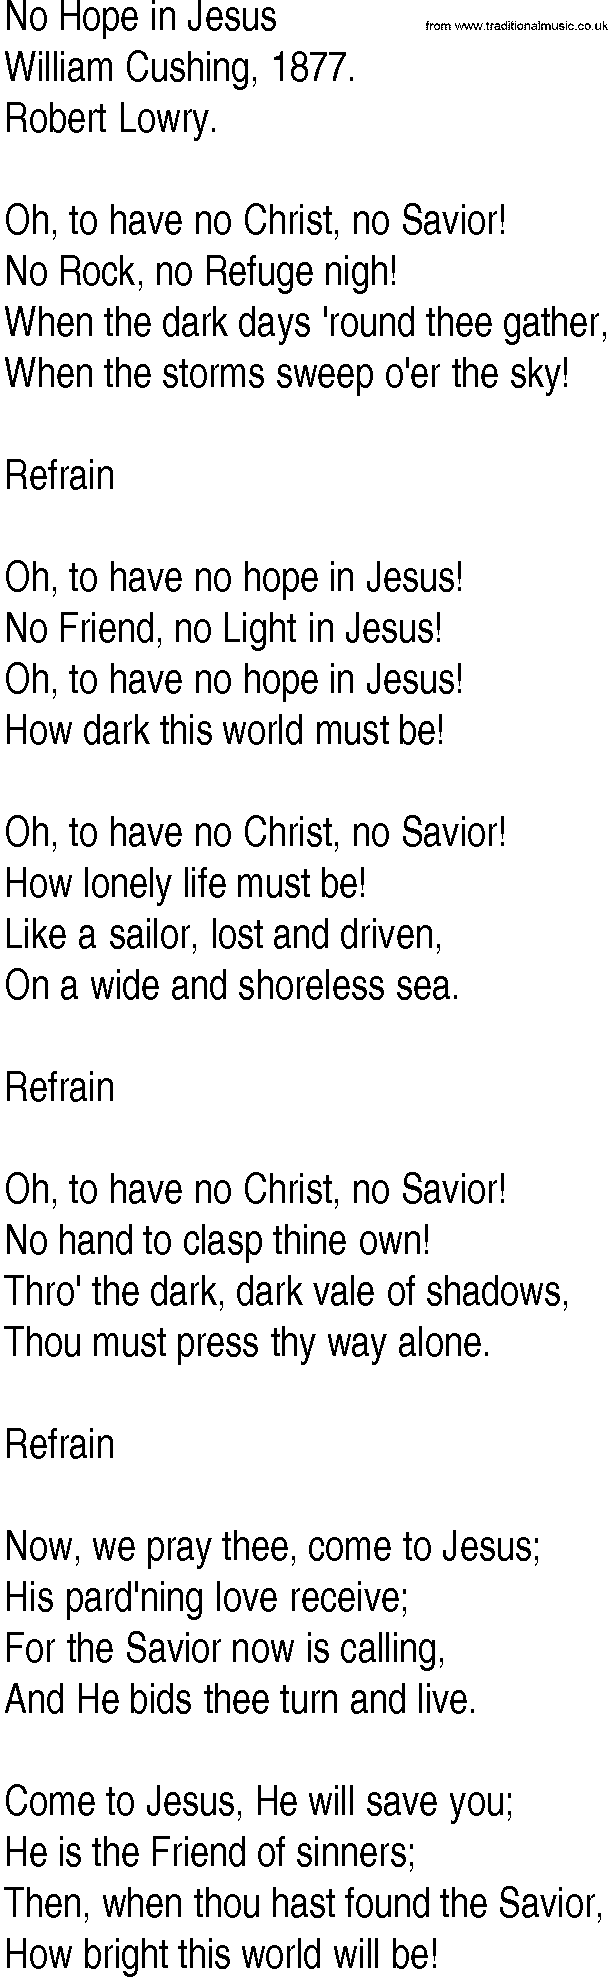 Hymn and Gospel Song: No Hope in Jesus by William Cushing lyrics